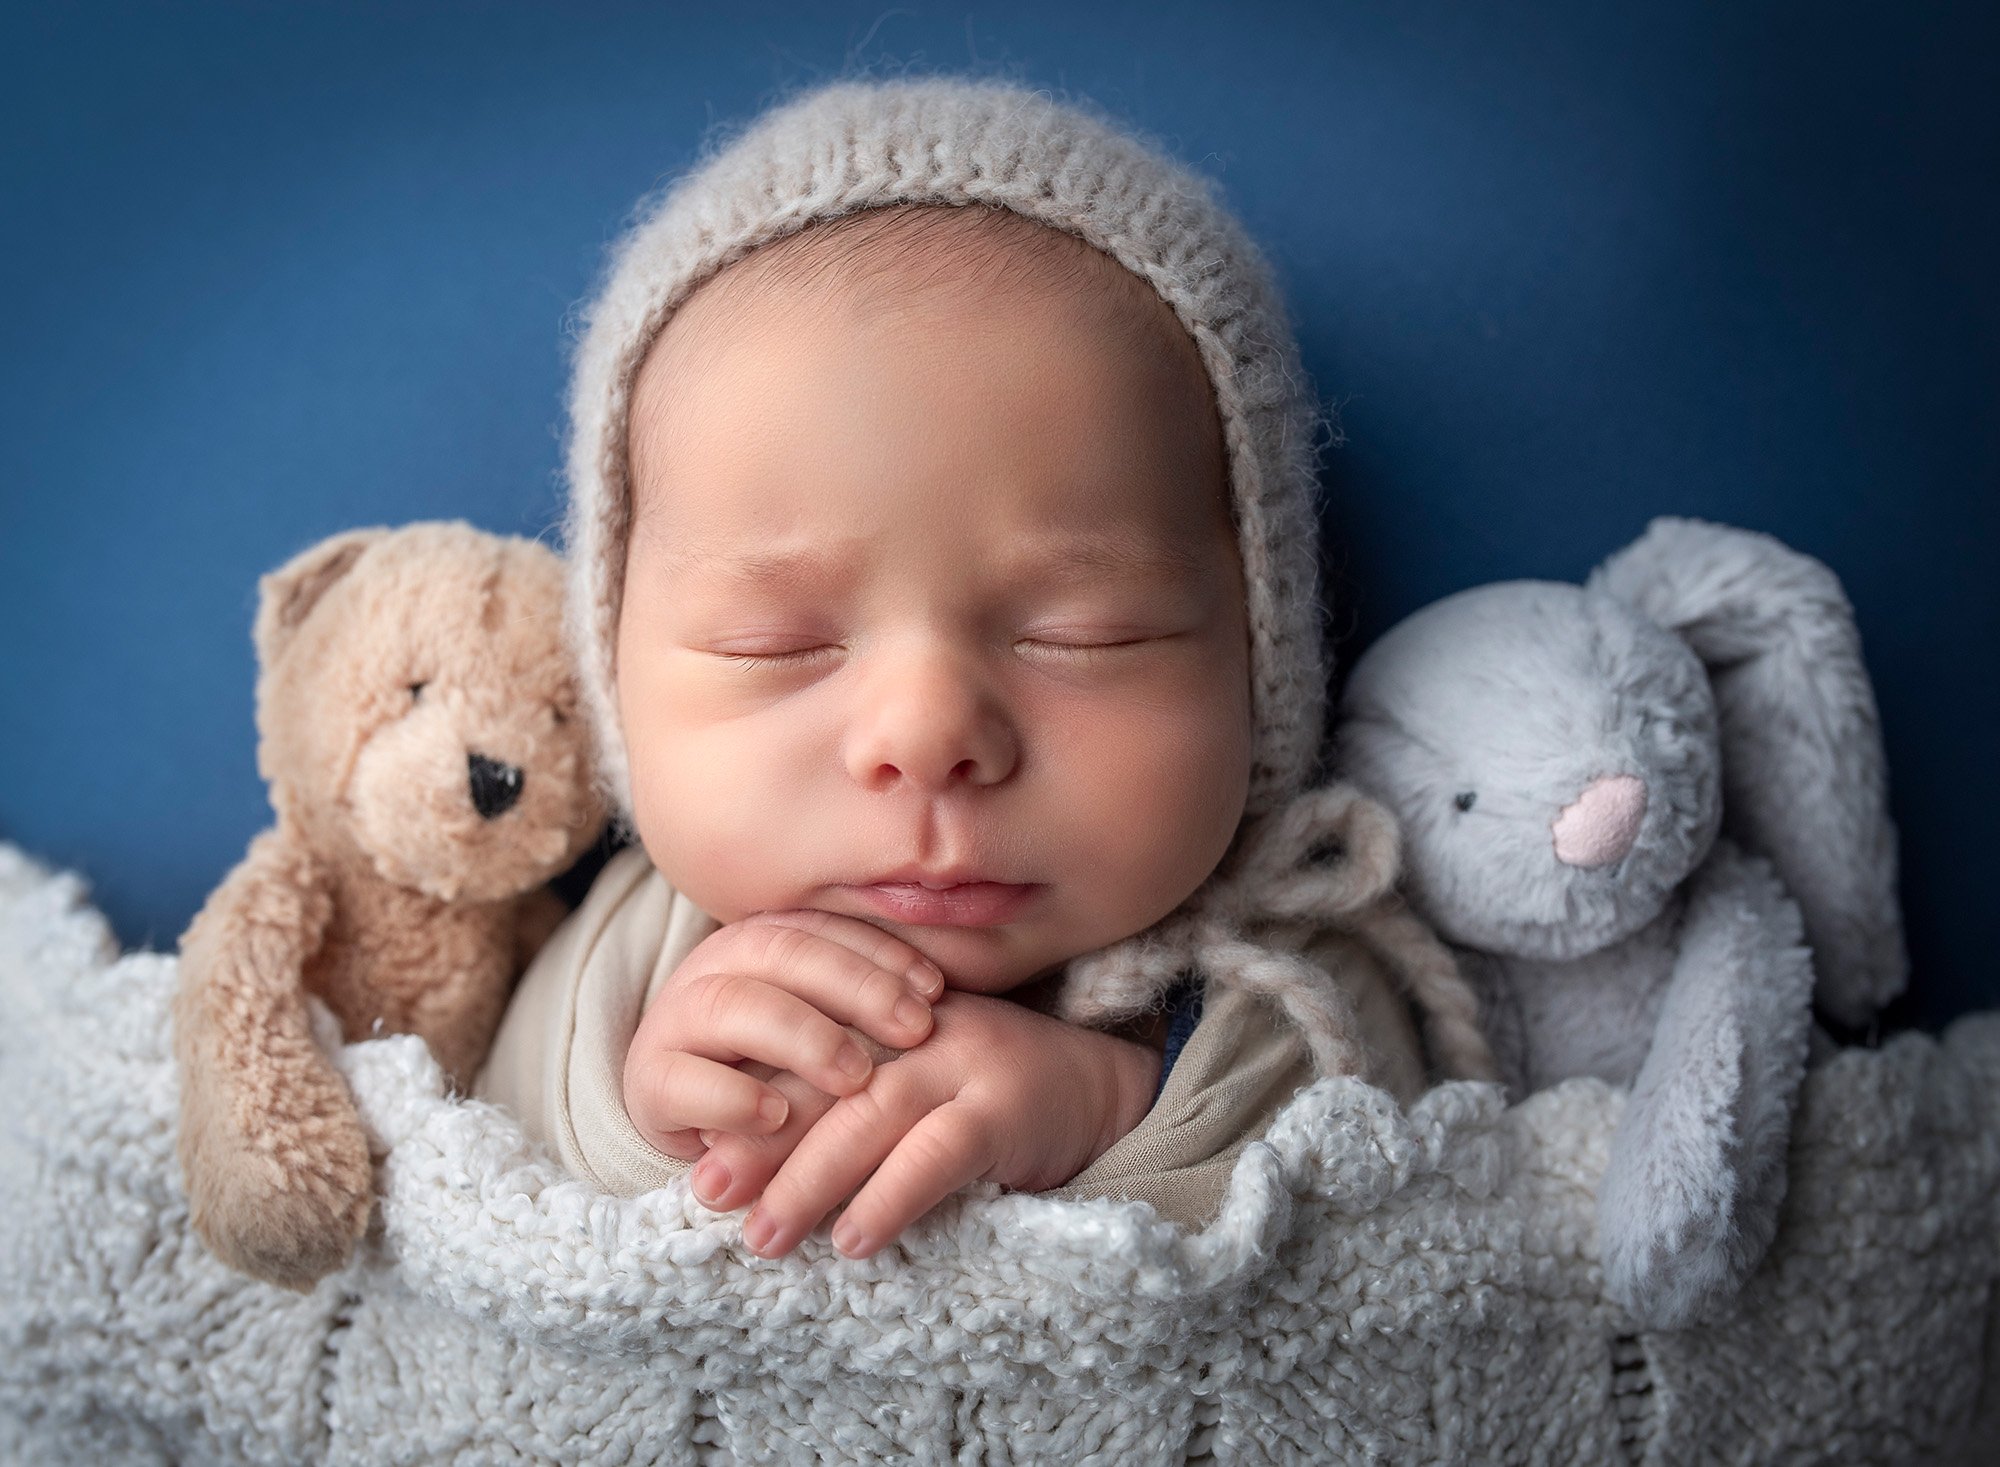 newborn baby boy wearing a bonnet snuggled in between a teddy bear and a bunny